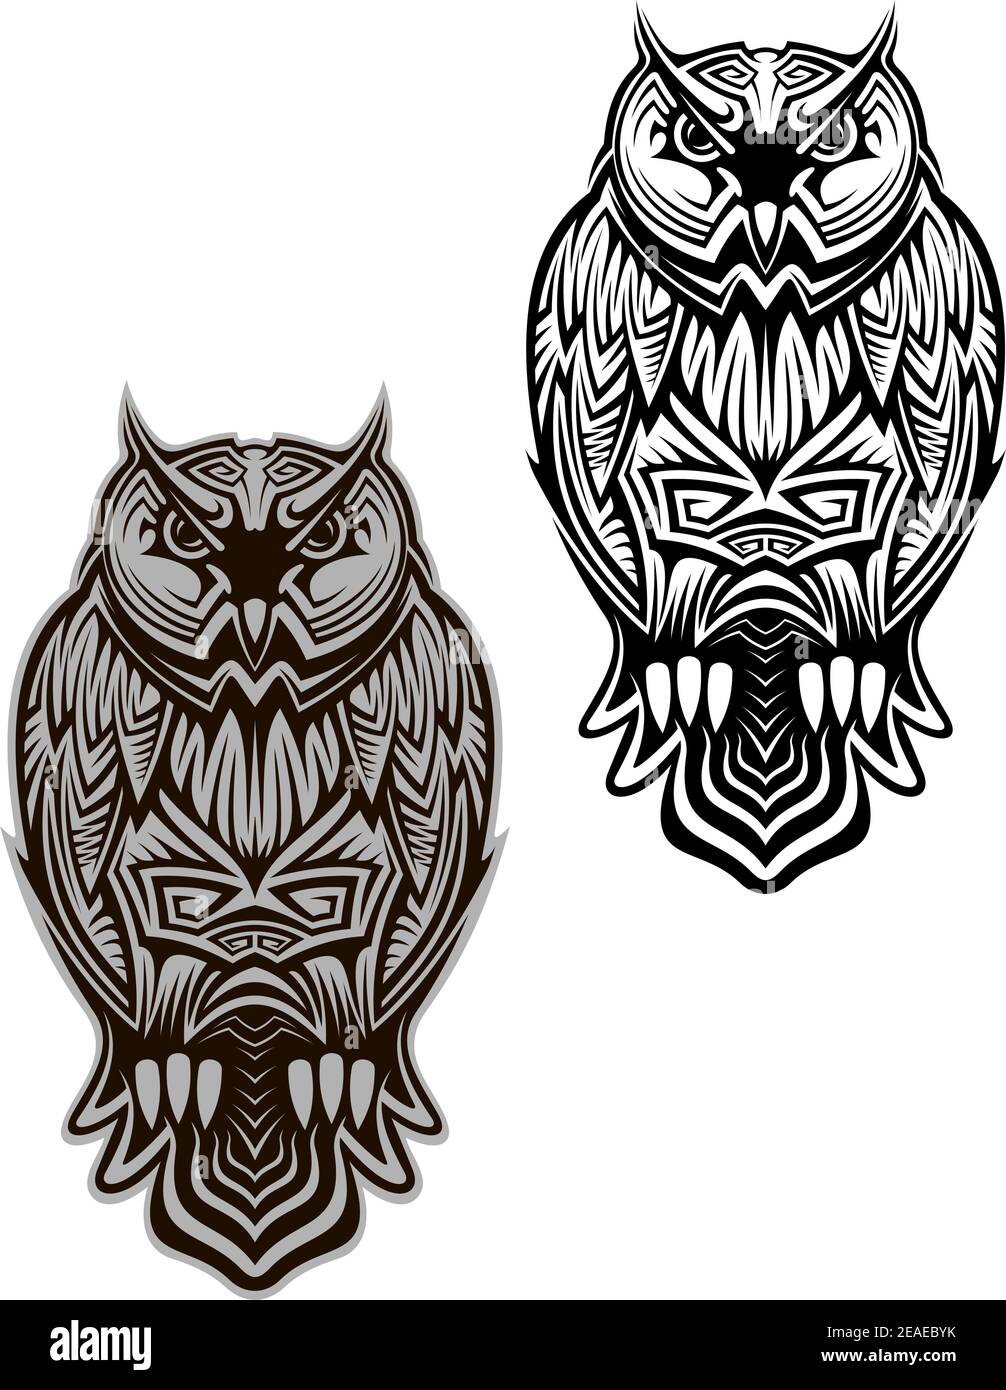 Share 151+ owl tattoo designs